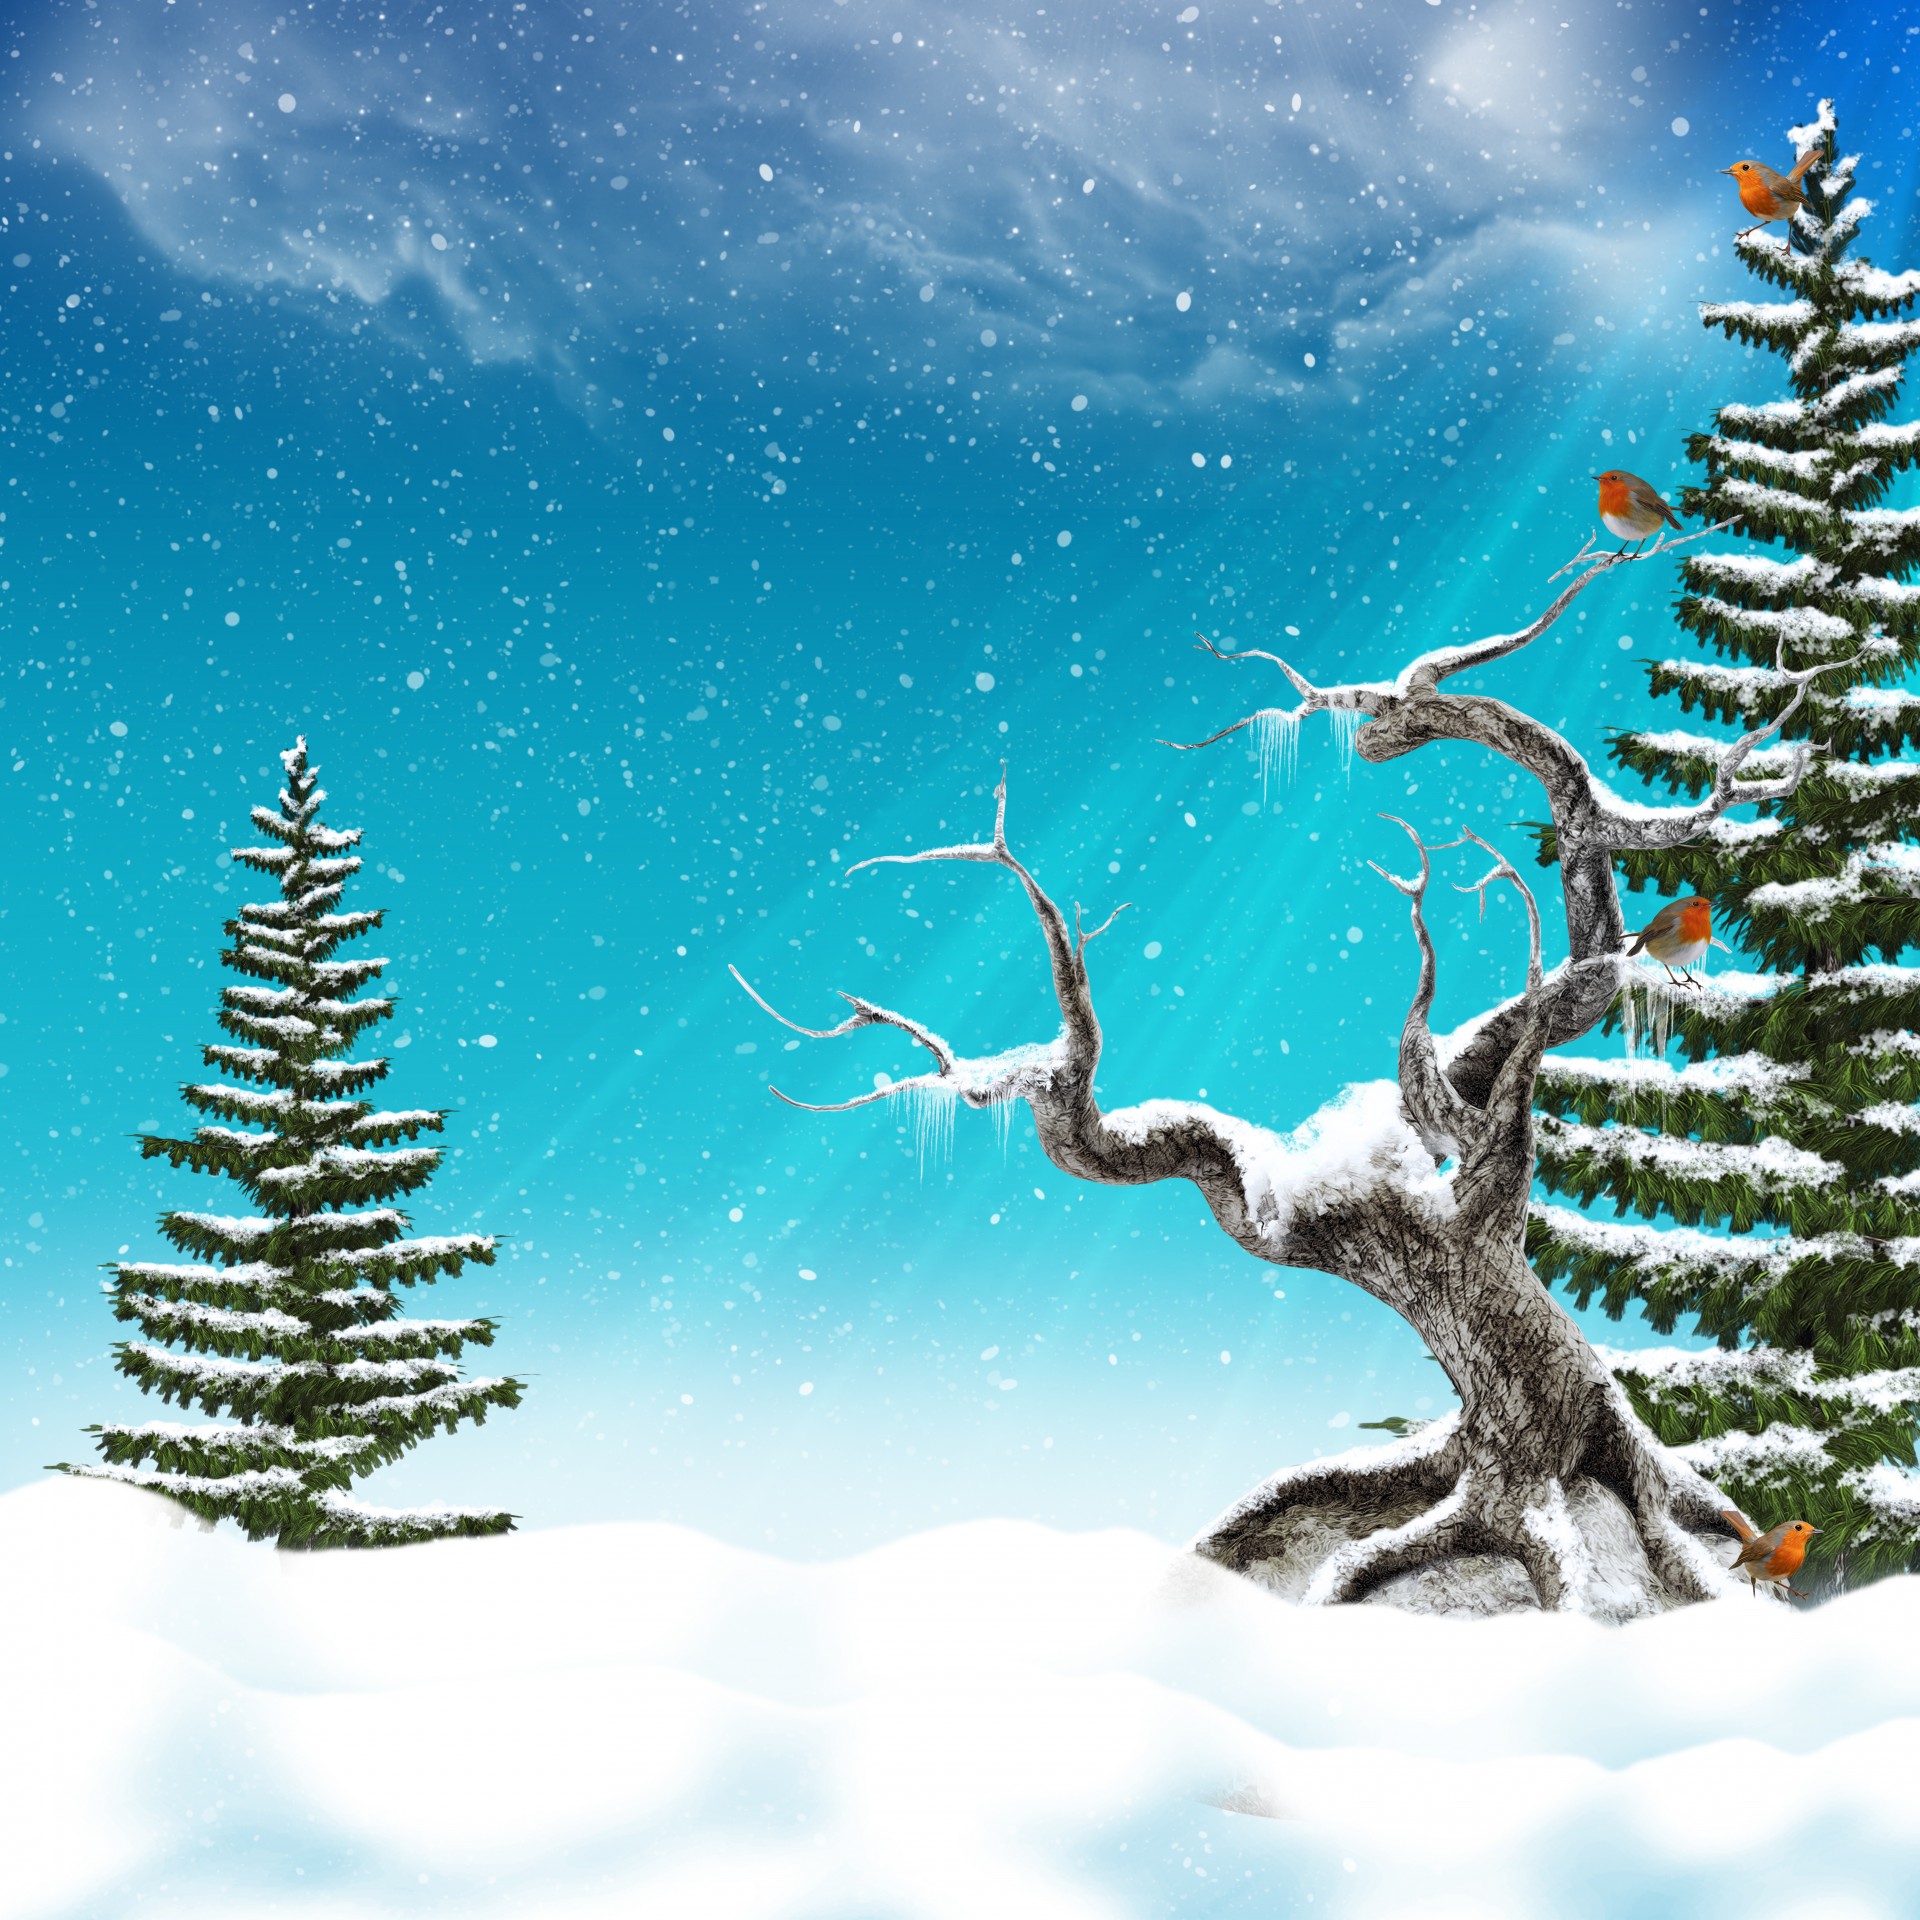 winter scenery background sheet background sheet backing paper free photo